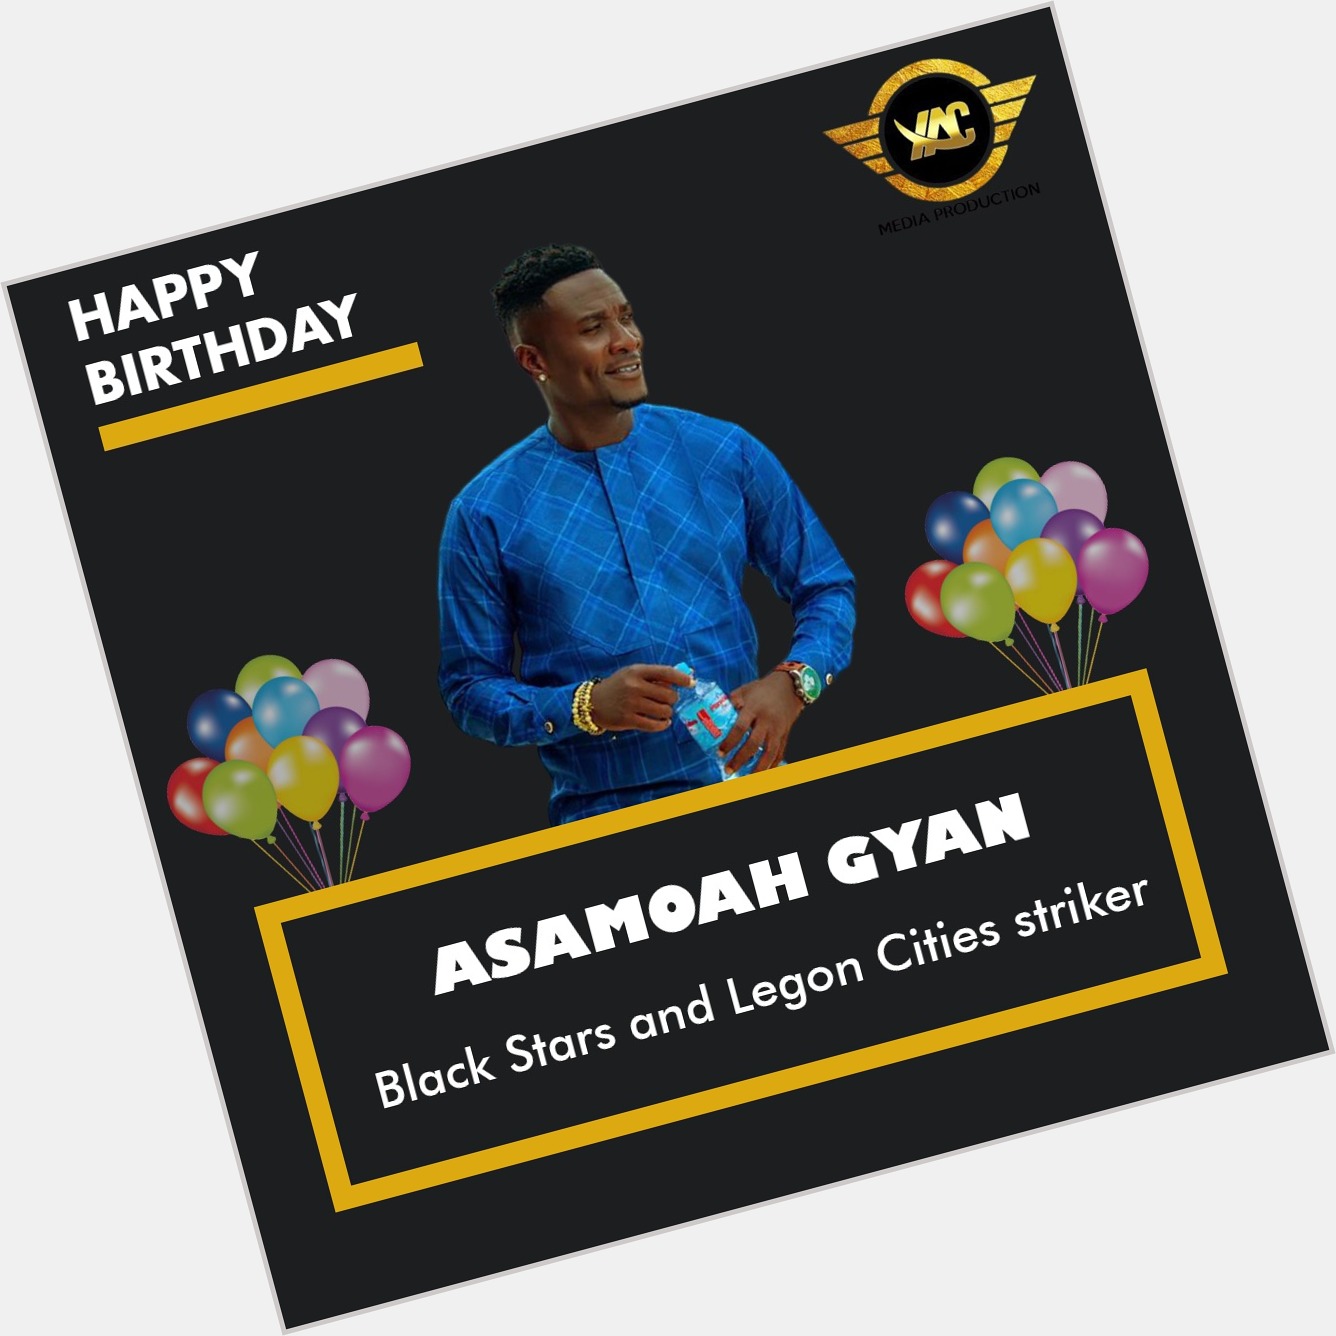 Happy Birthday to Black stars and Legon Cities striker, Asamoah Gyan     Enjoy your day legend 